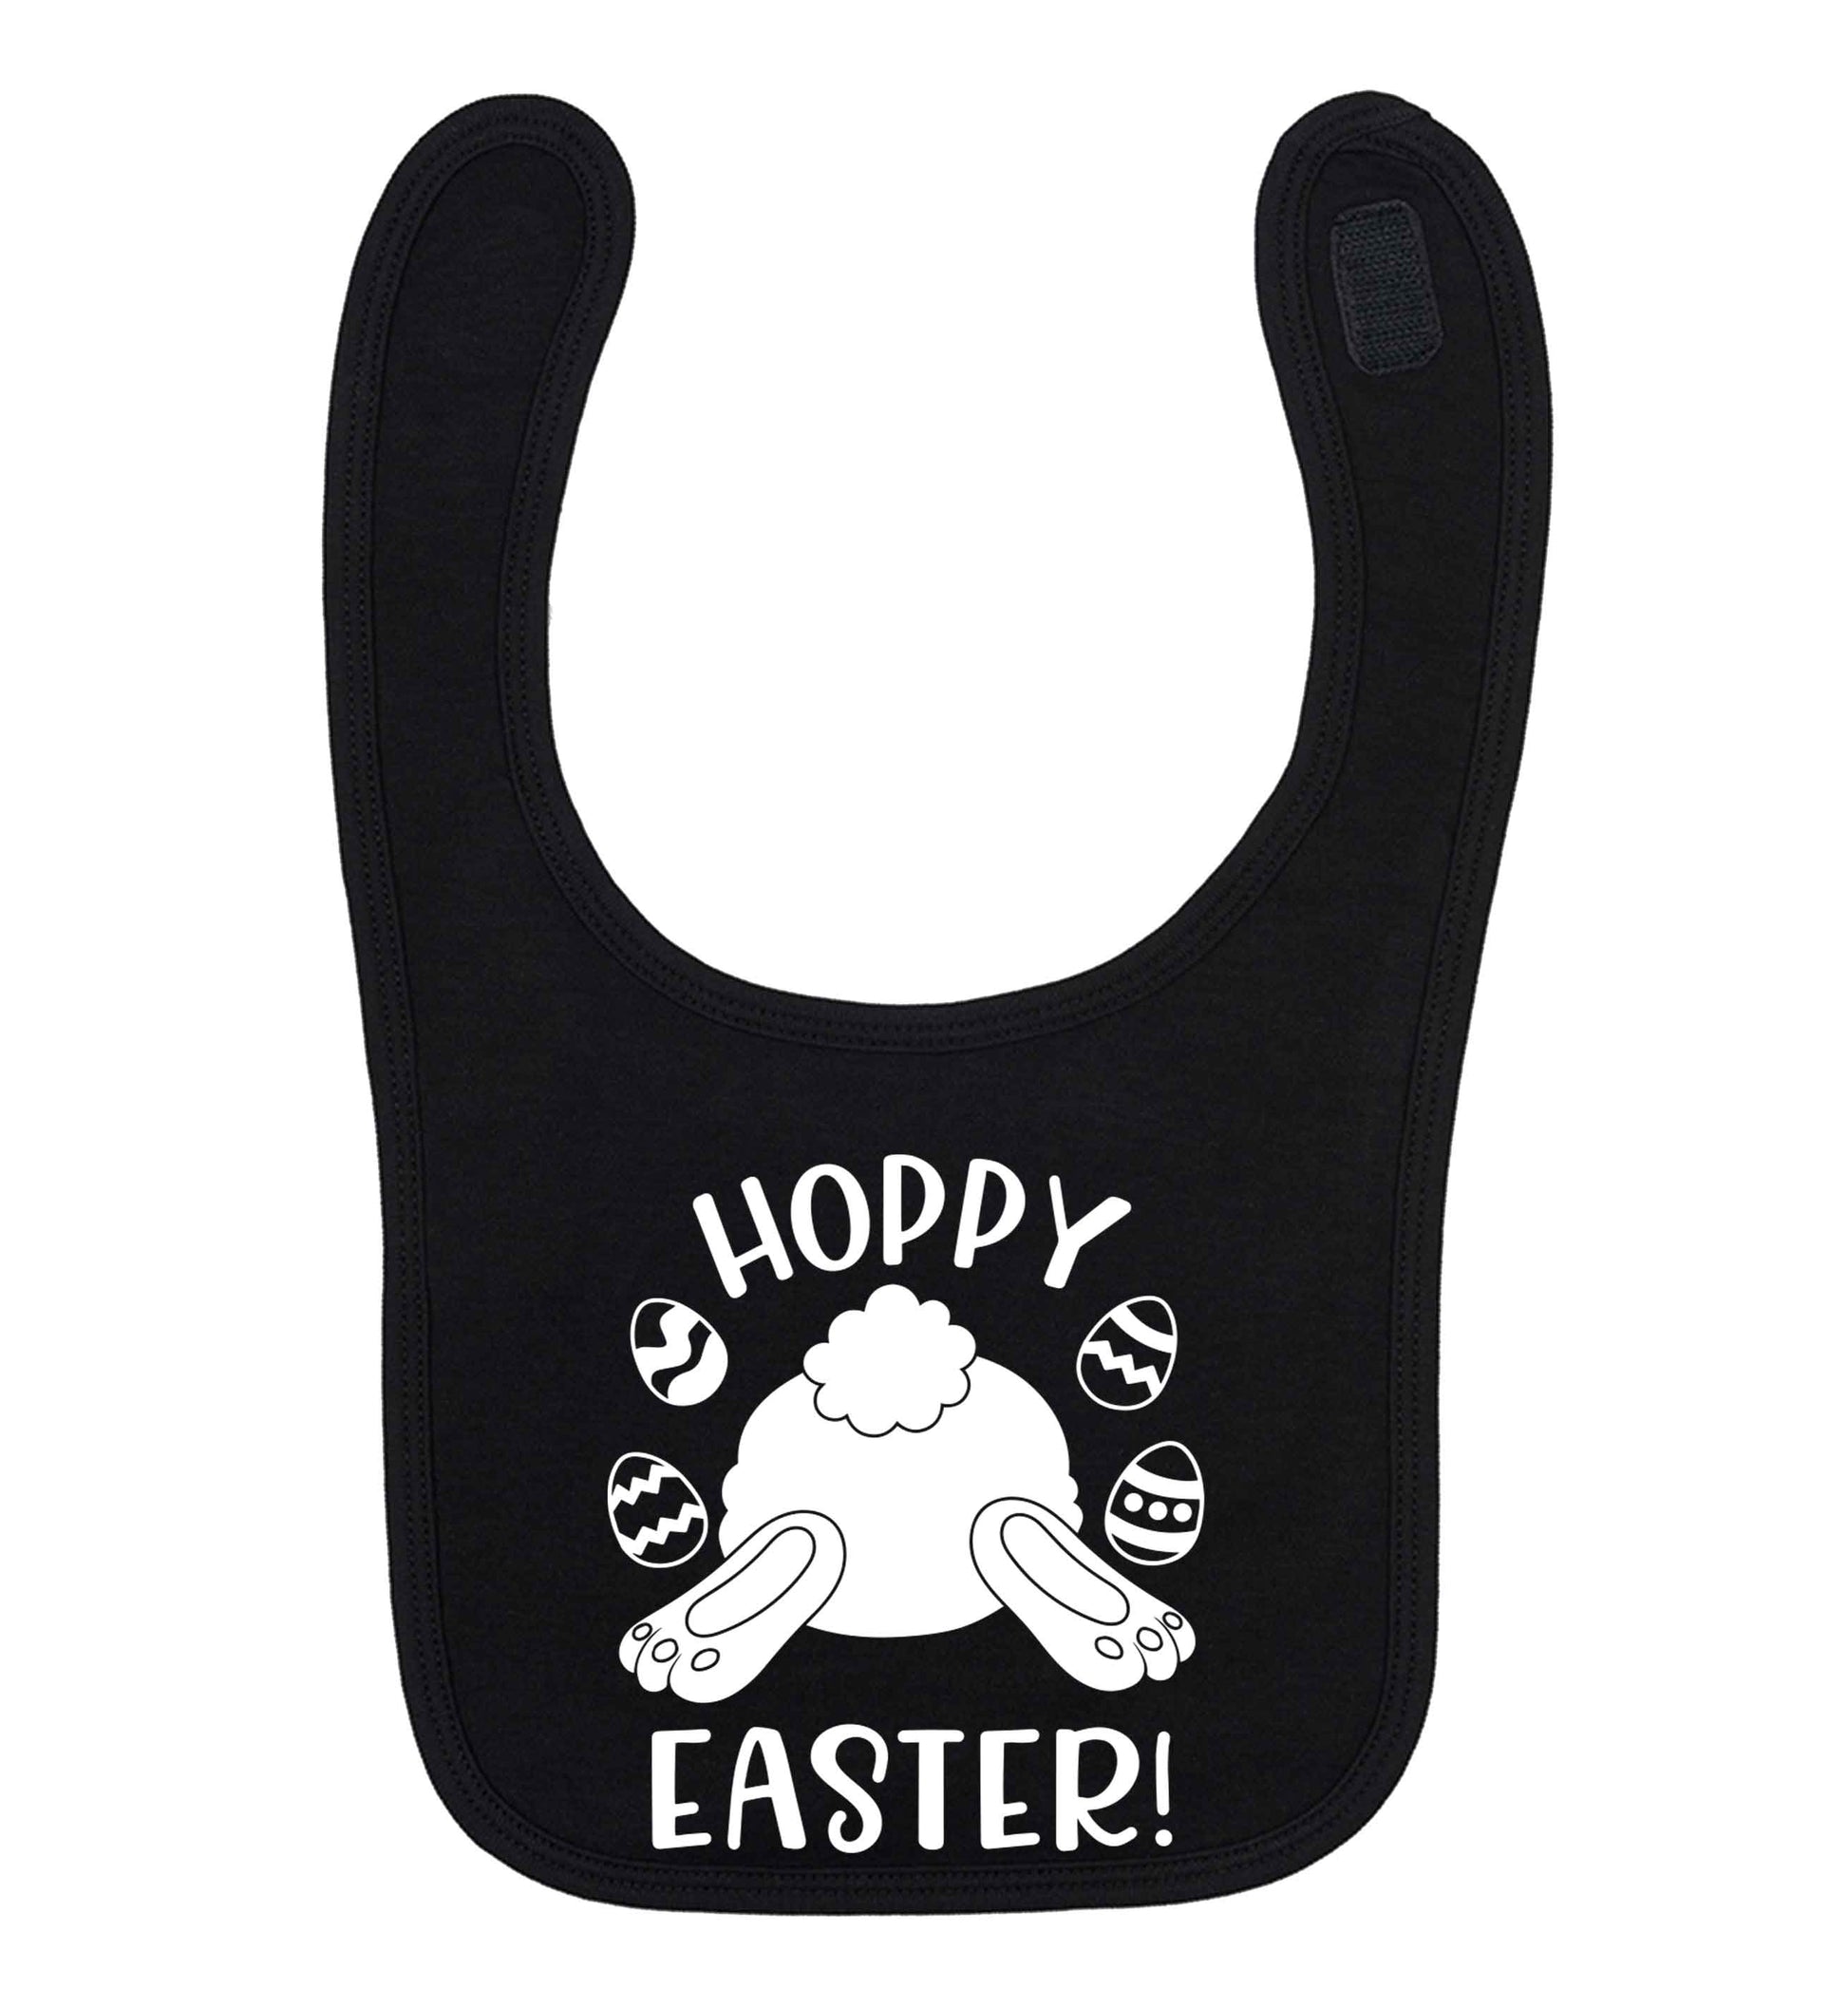 Hoppy Easter black baby bib